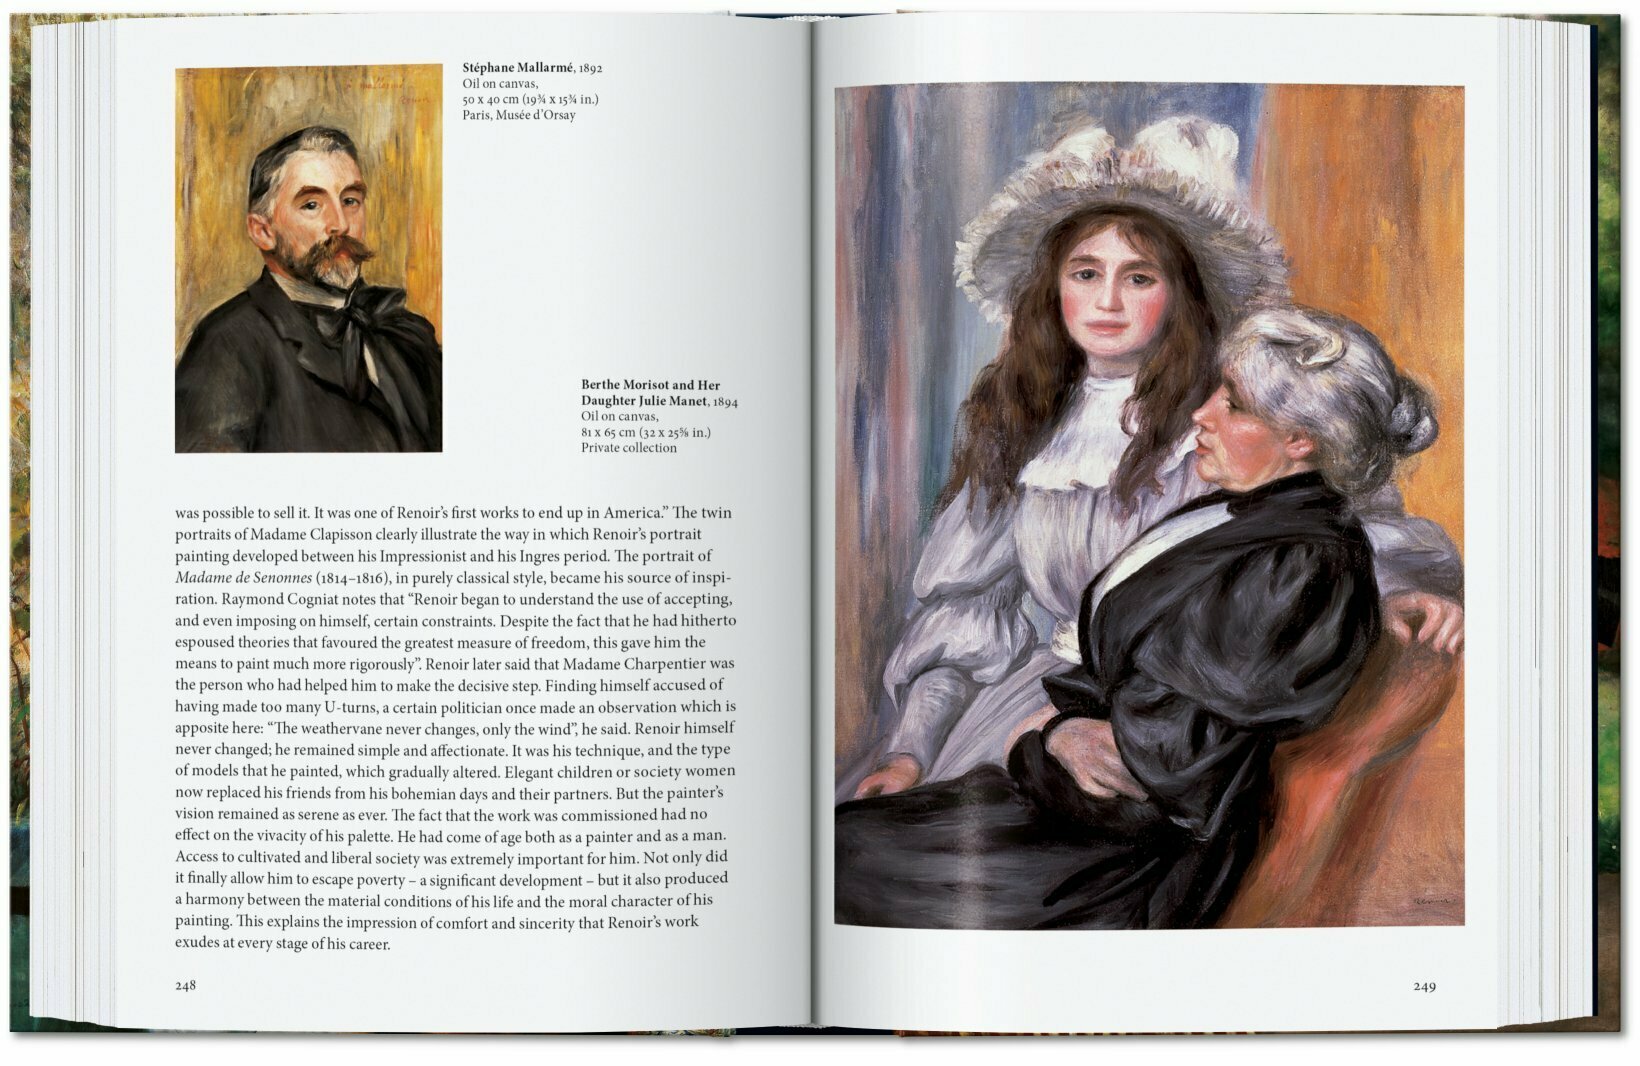 Artbook - Sách Tiếng Anh - Renoir